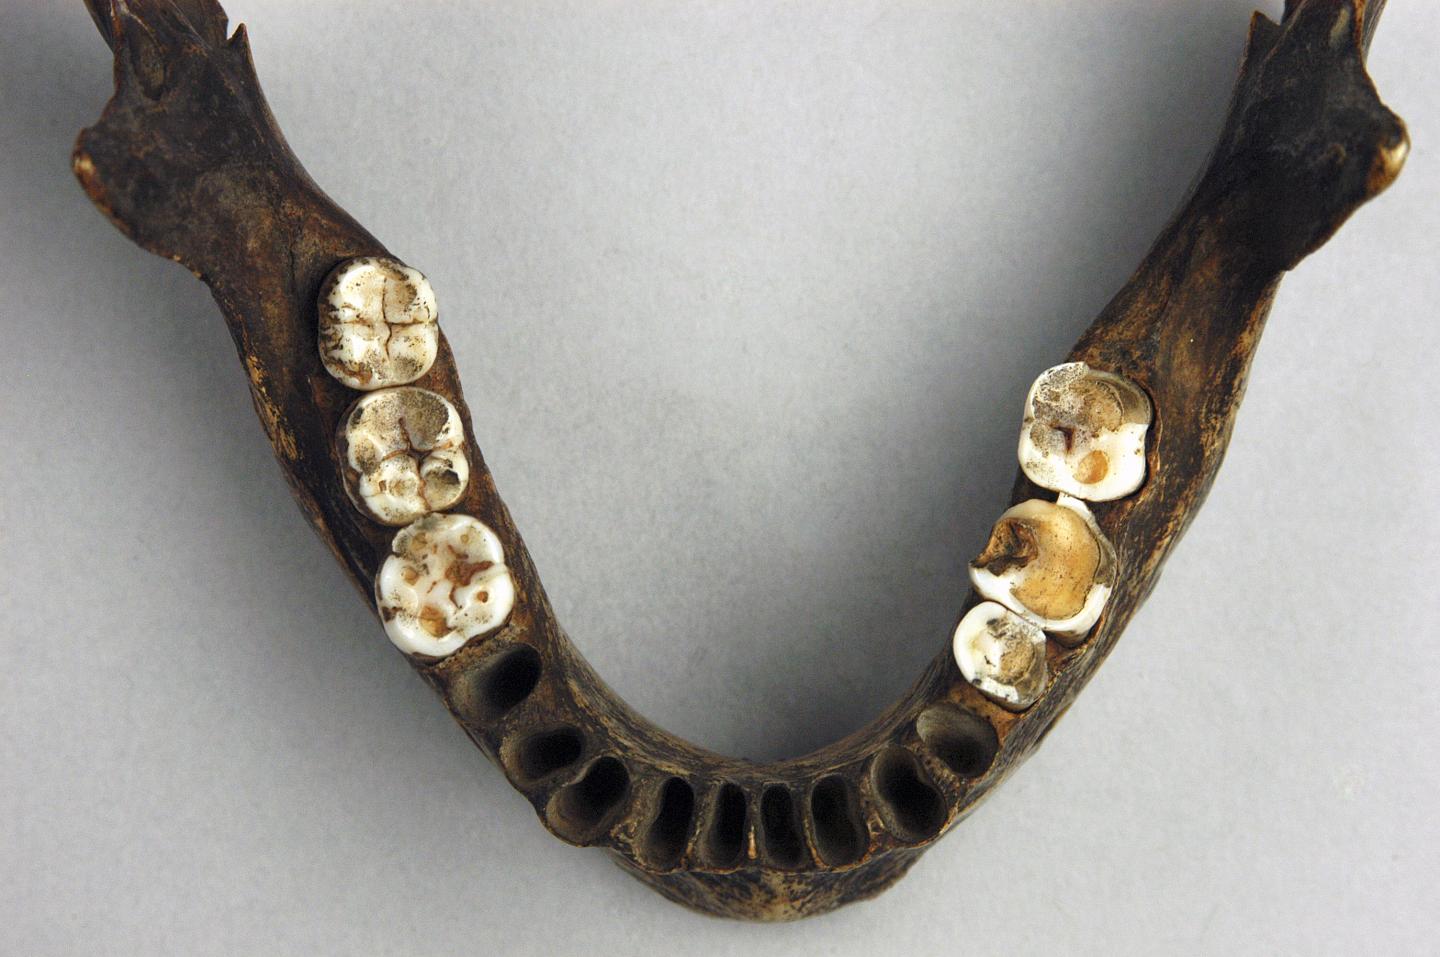 Archaeological Mandible and Teeth